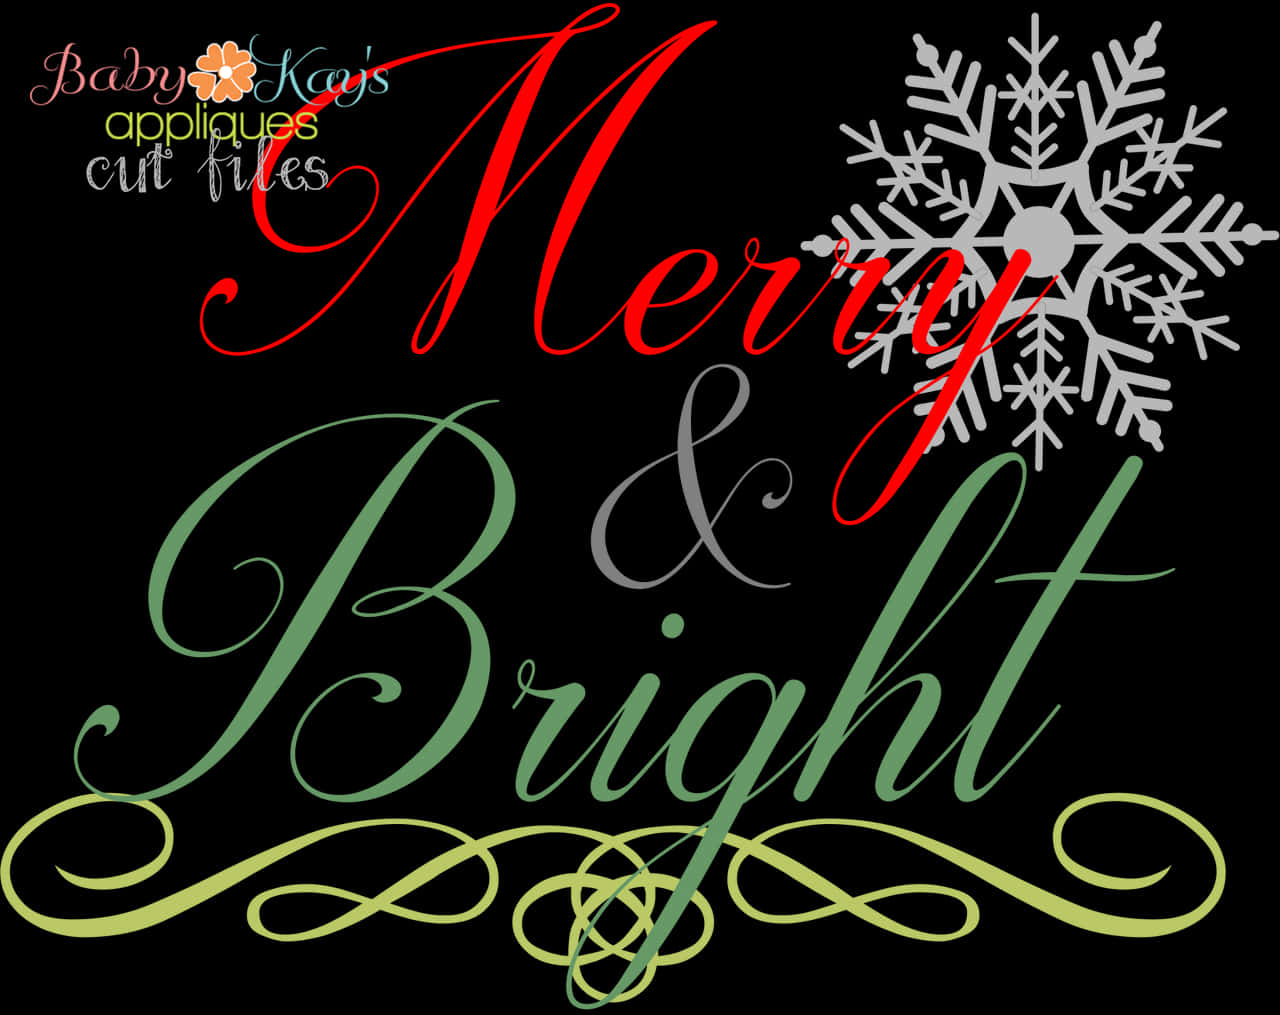 Merryand Bright Christmas Greeting PNG